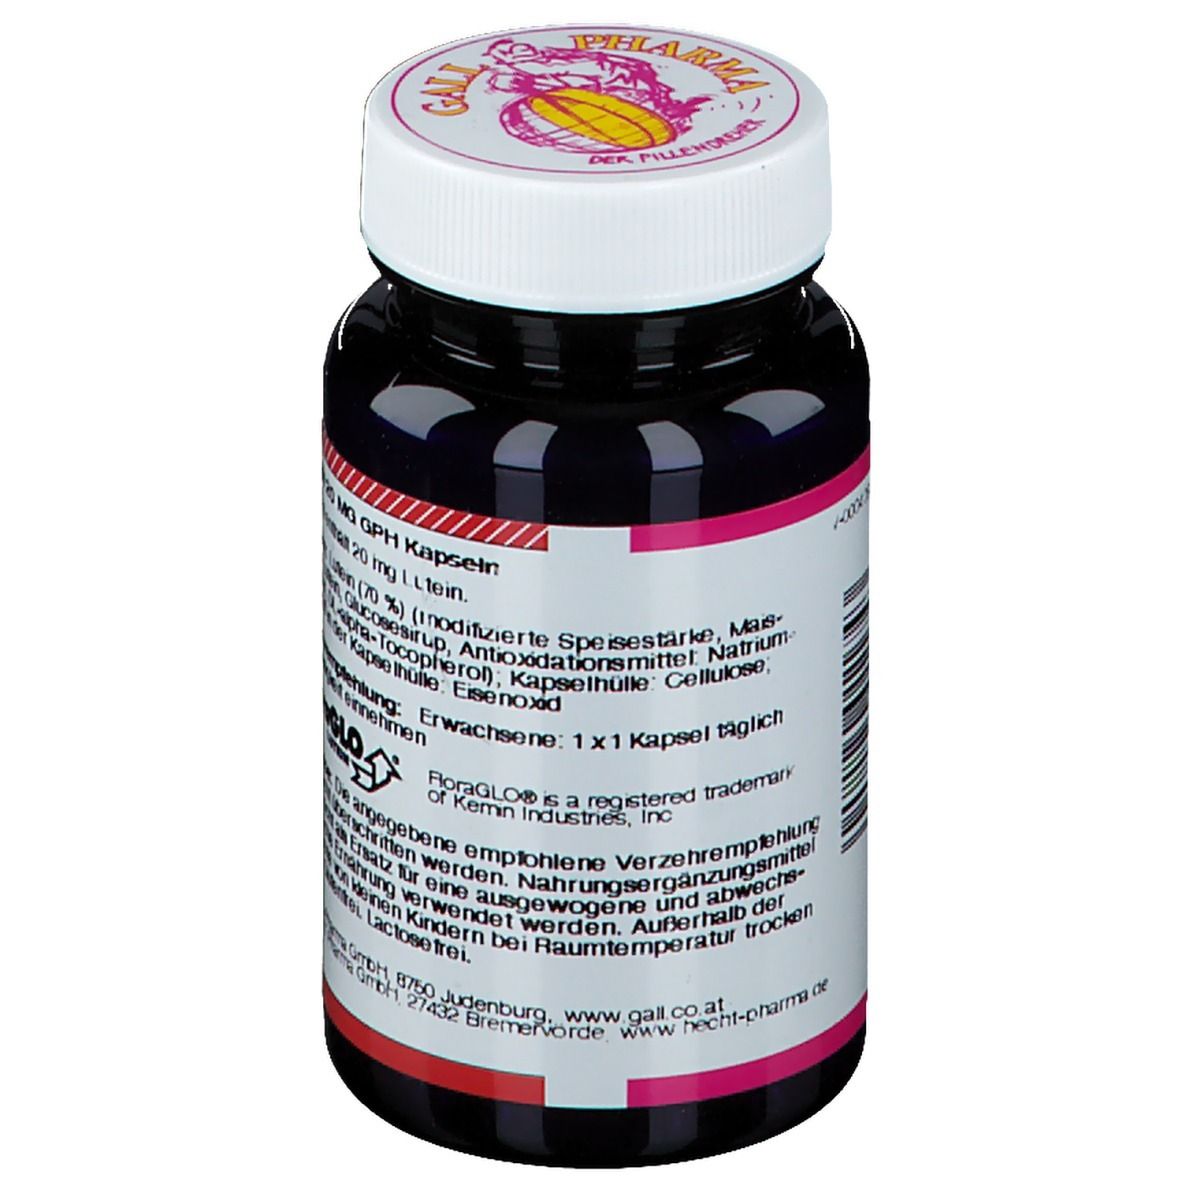 GALL PHARMA LUTEIN 20 mg GPH Kapseln